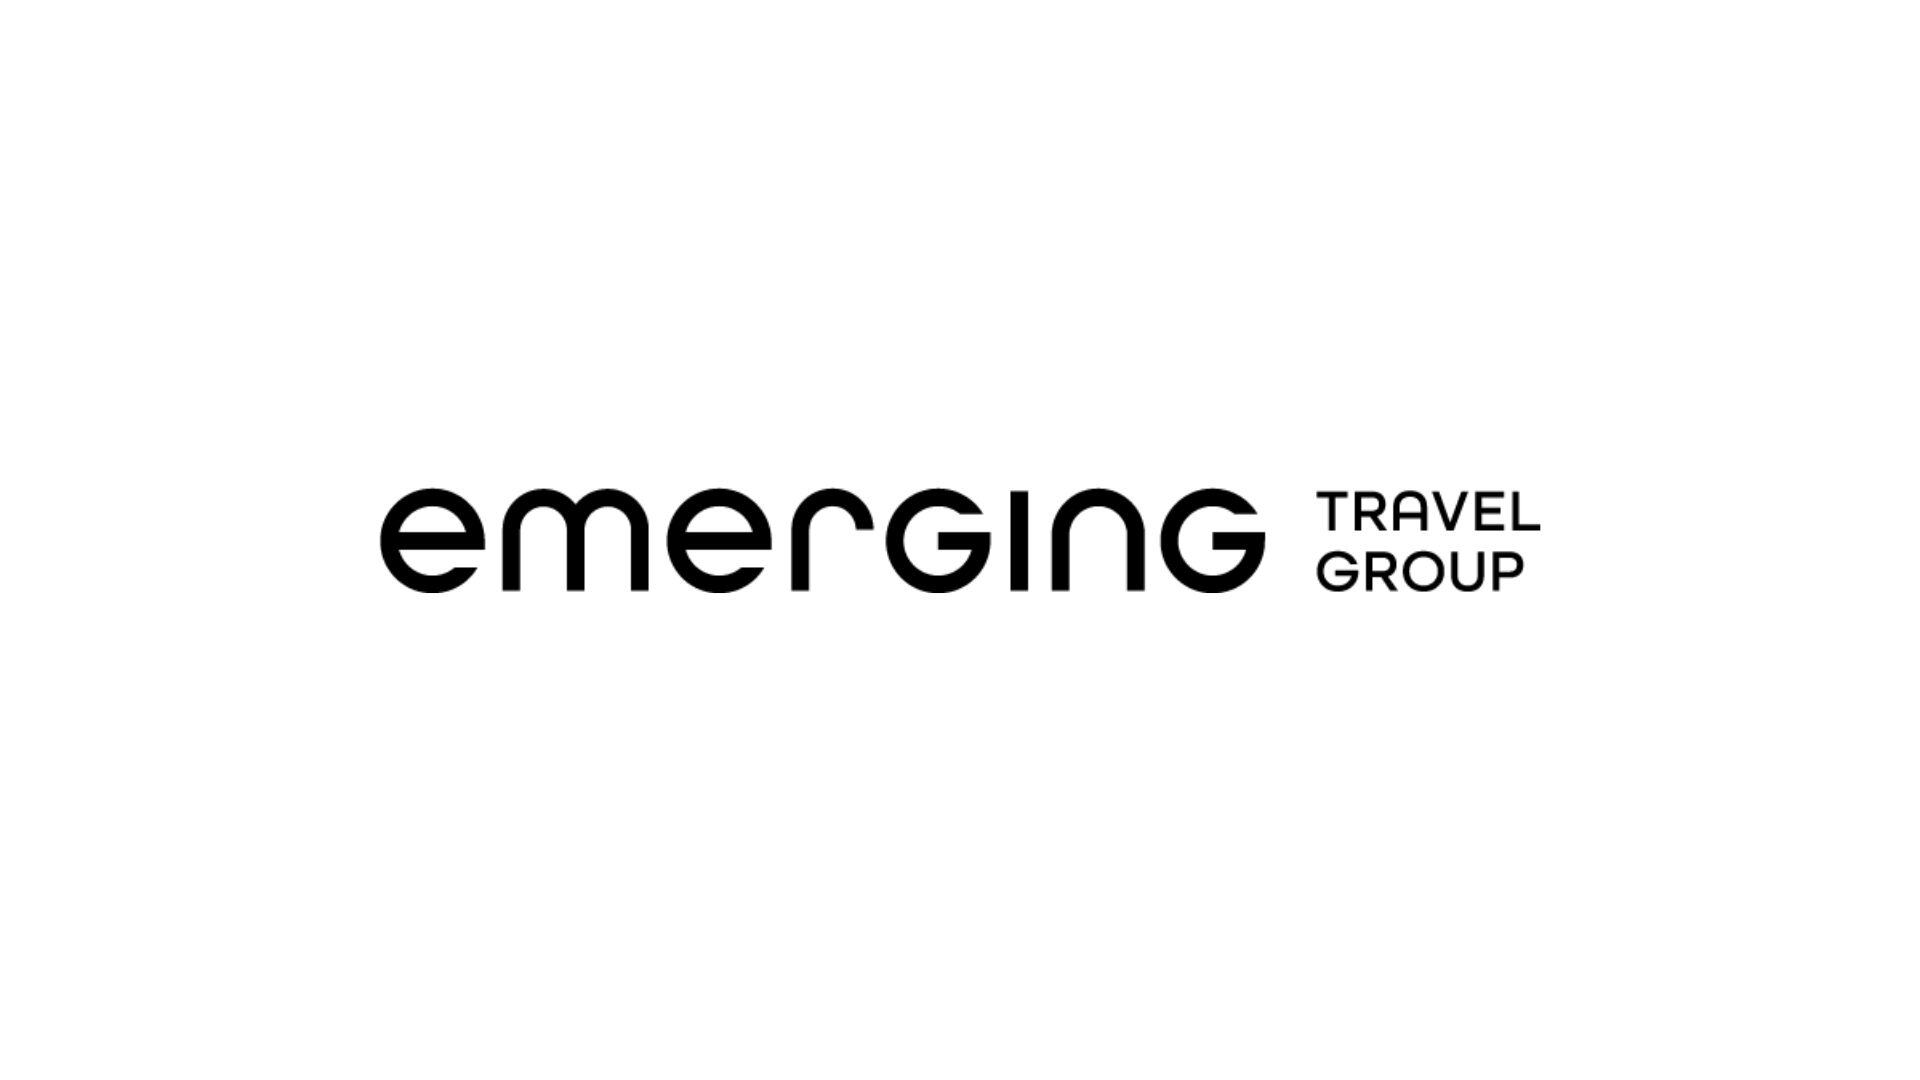 Emerging Travel group